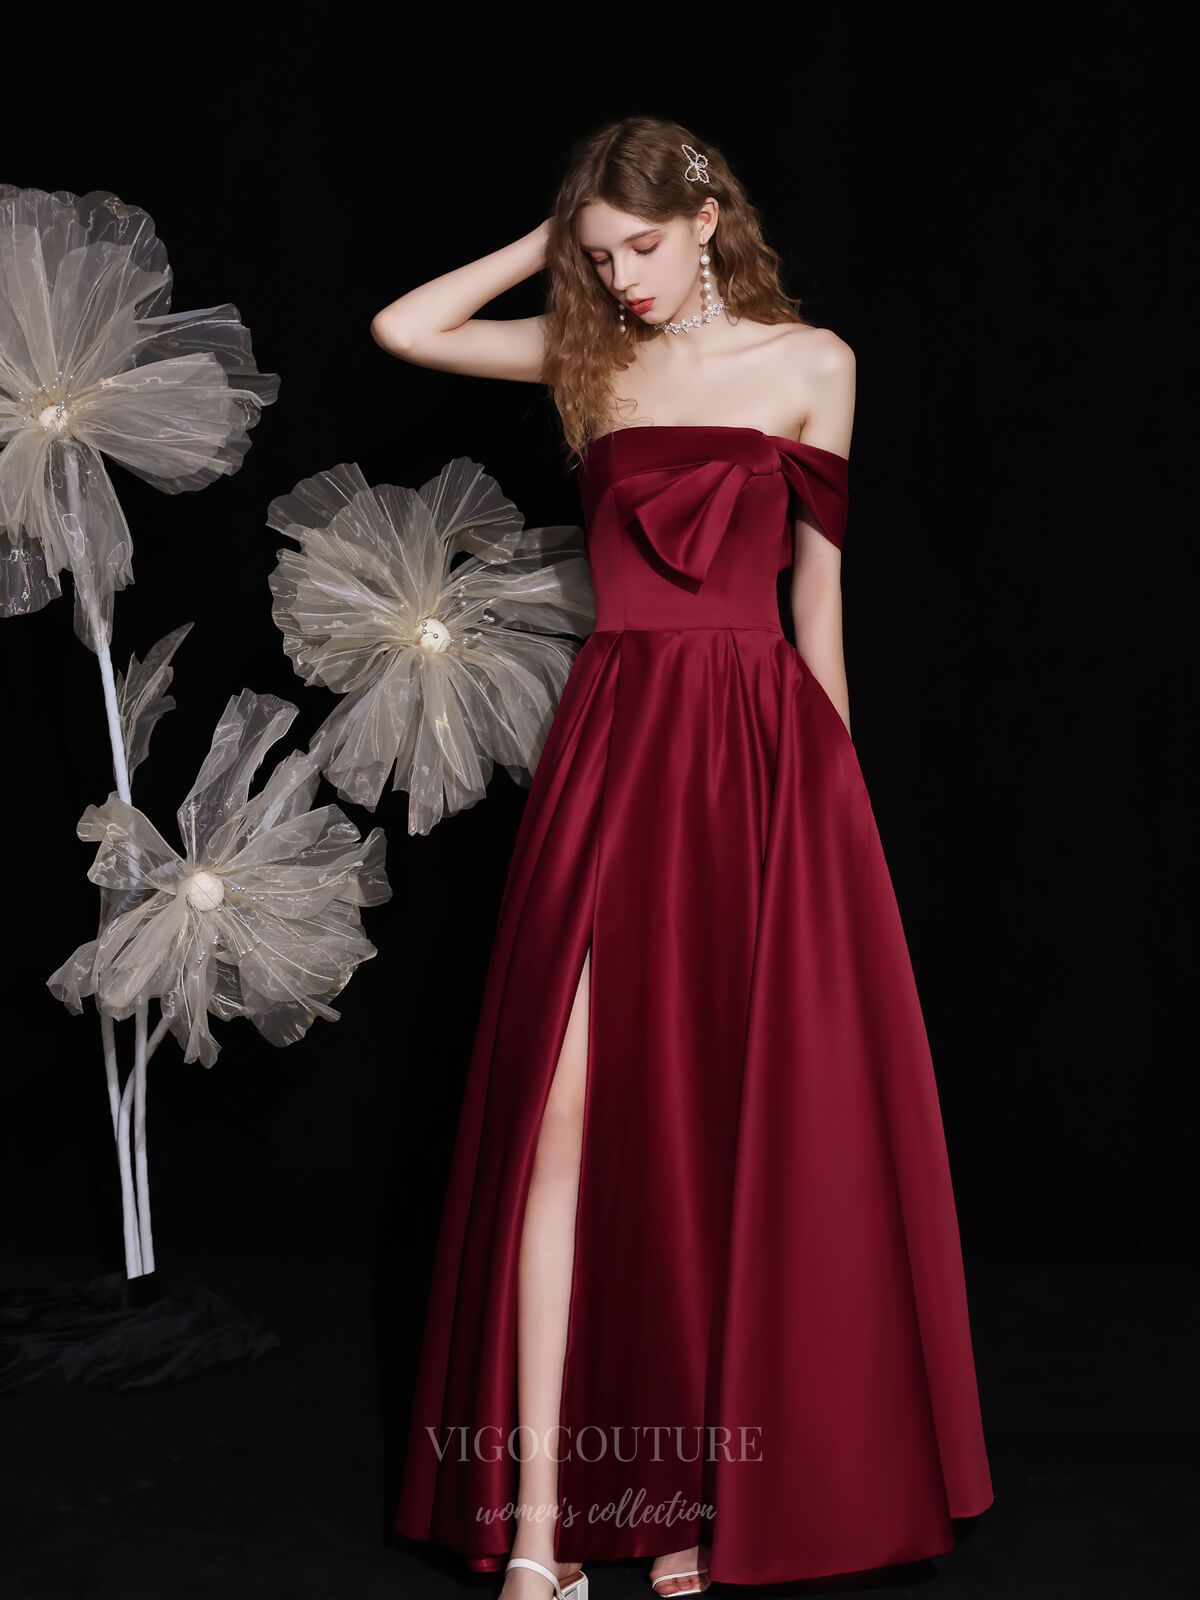 vigocouture-Burgundy Strapless Satin Prom Dress 20723-Prom Dresses-vigocouture-Burgundy-US2-